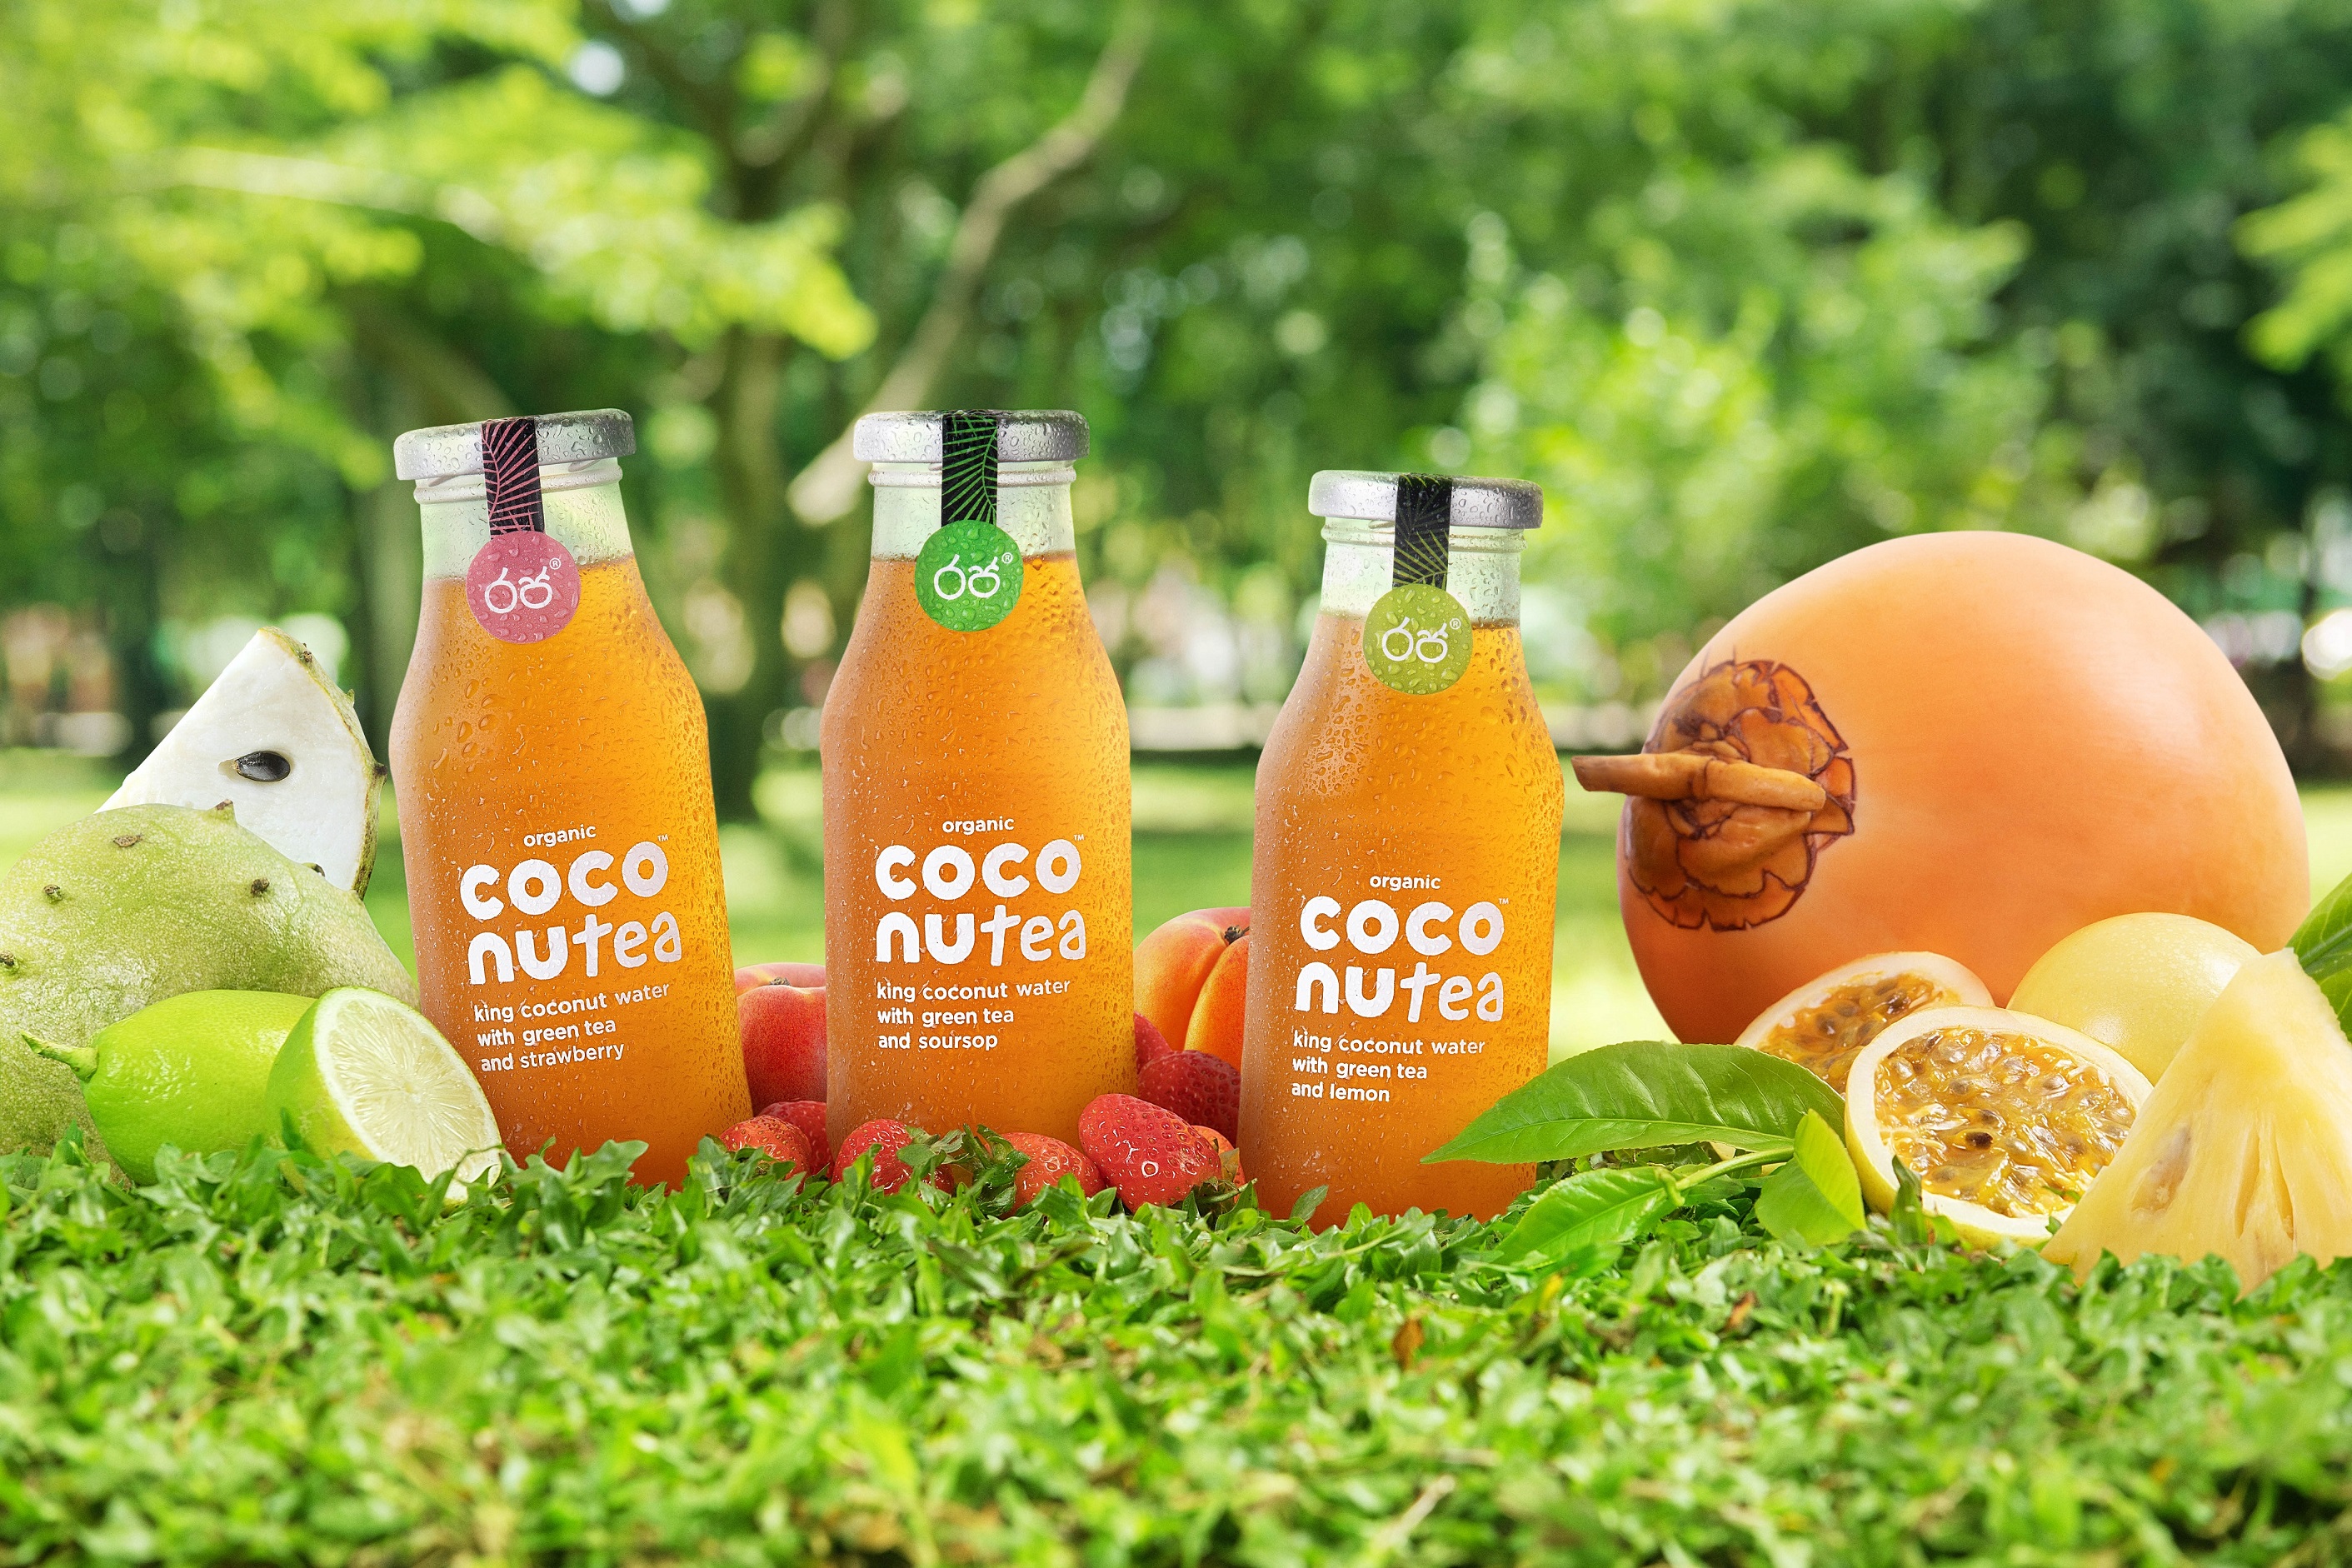 https://www.beveragedaily.com/var/wrbm_gb_food_pharma/storage/images/media/images/coconutea-launch-range-of-king-coconut-and-green-tea-drinks/16303546-1-eng-GB/Coconutea-Launch-range-of-King-Coconut-and-Green-Tea-drinks.jpg